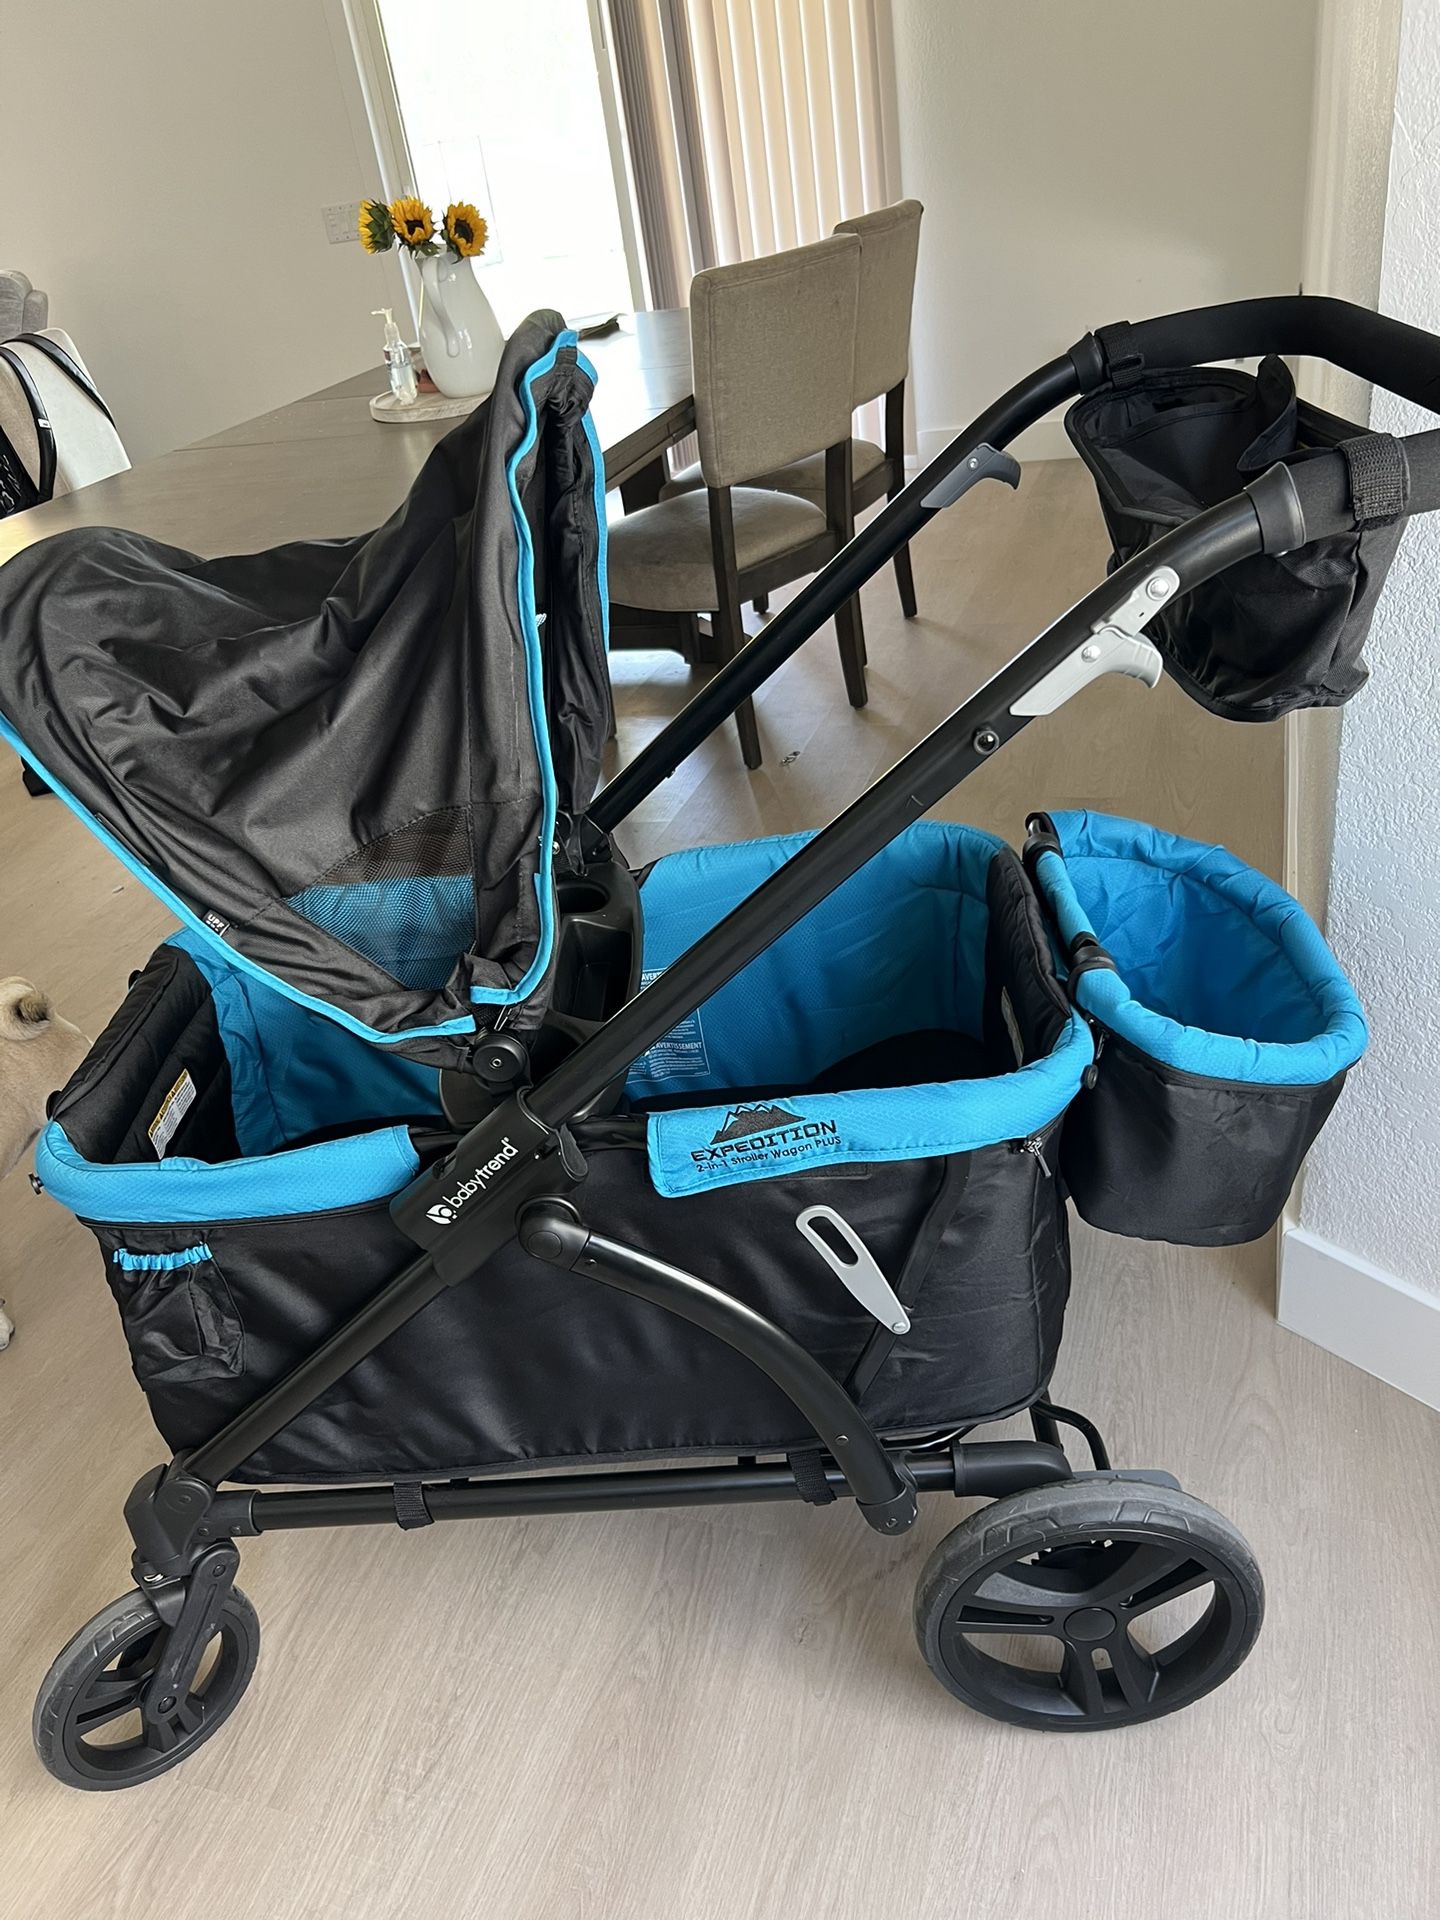 Baby Trend Wagon Stroller Plus